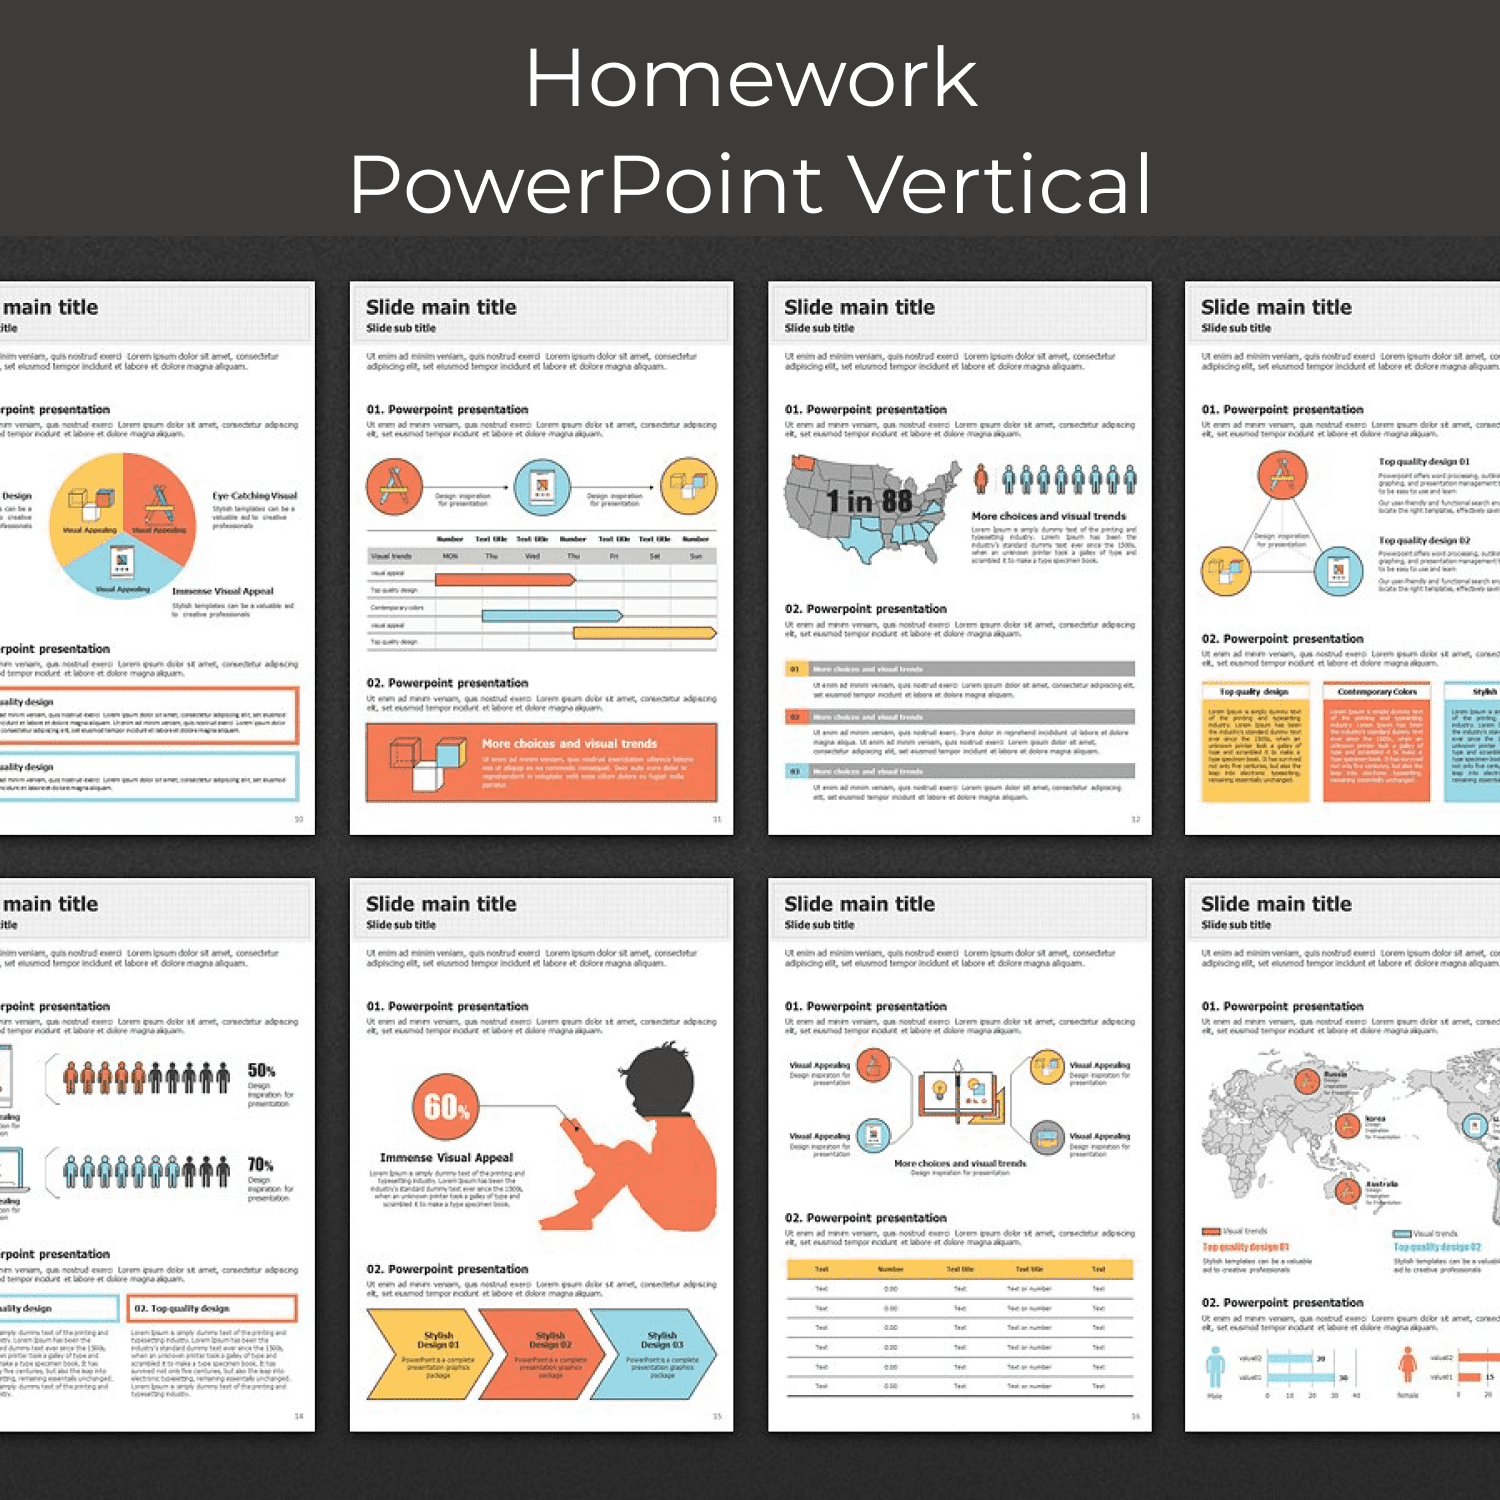 Homework PowerPoint Vertical cover.